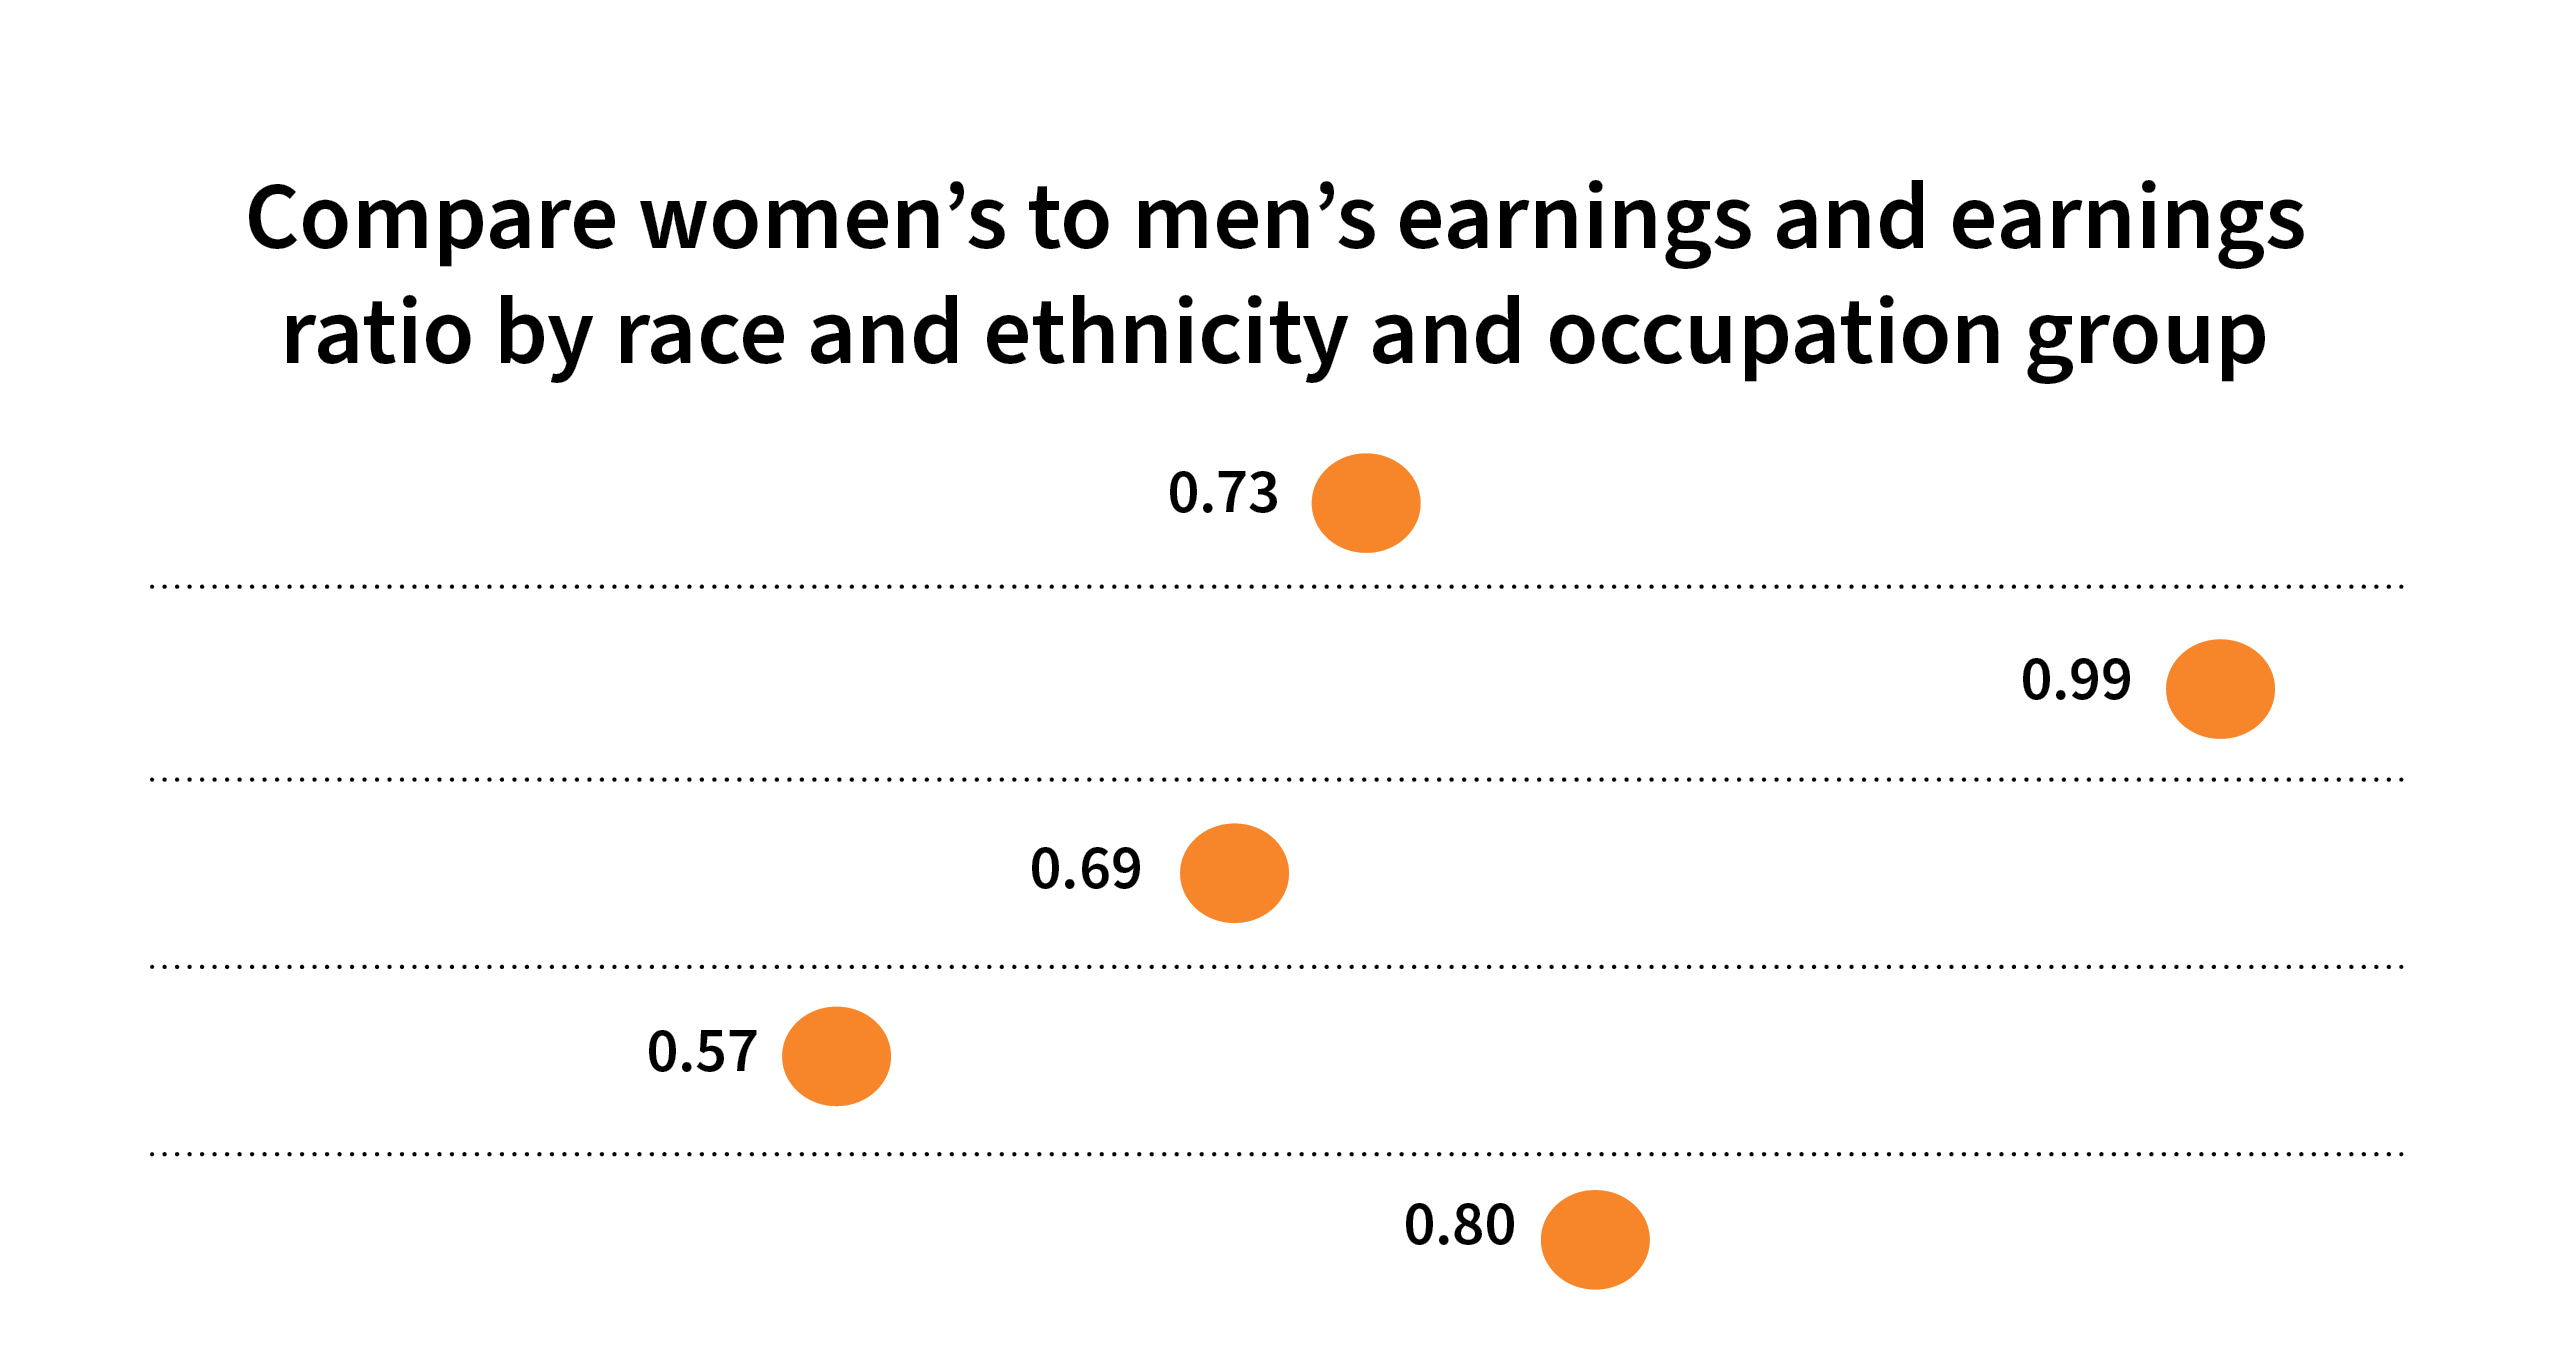 Women’s to men’s earnings ratio by race in service occupations